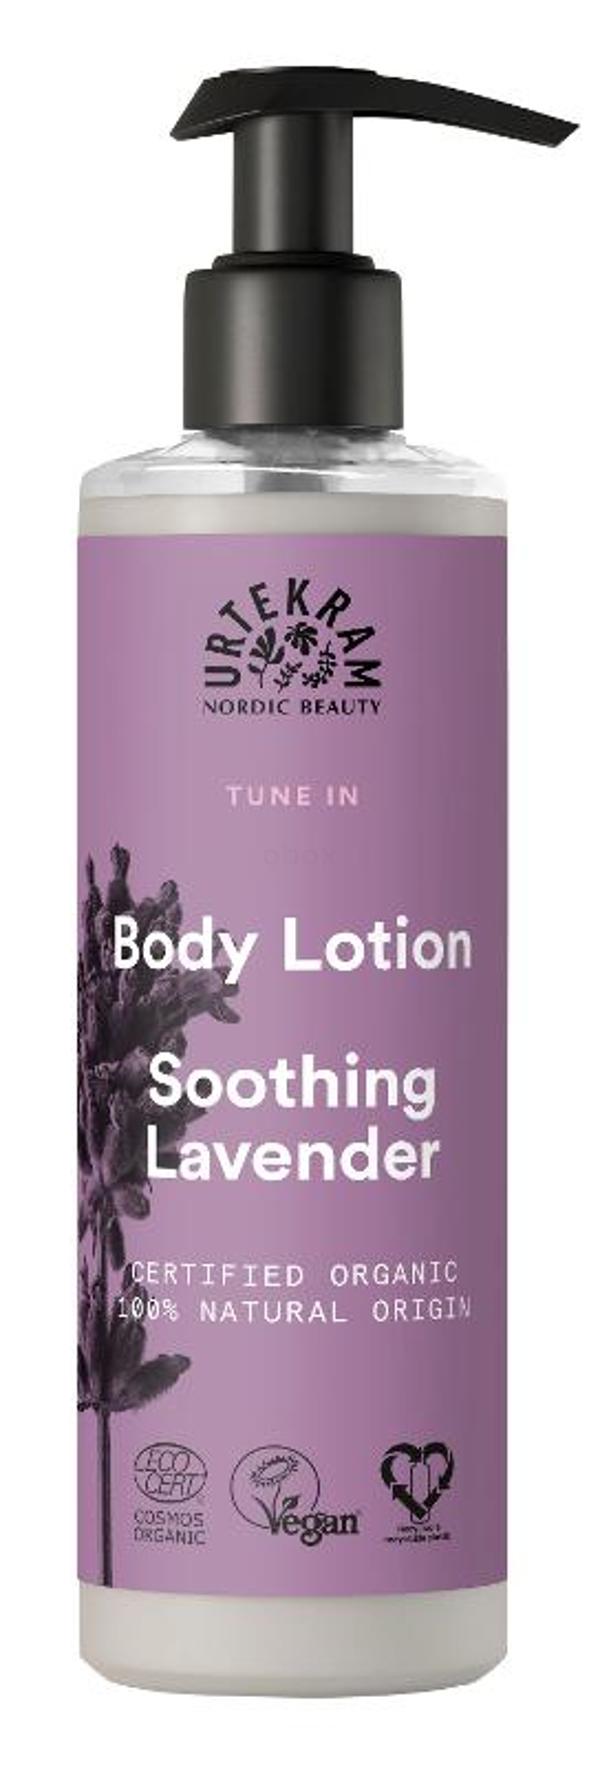 Produktfoto zu Lavendel Body Lotion 245ml